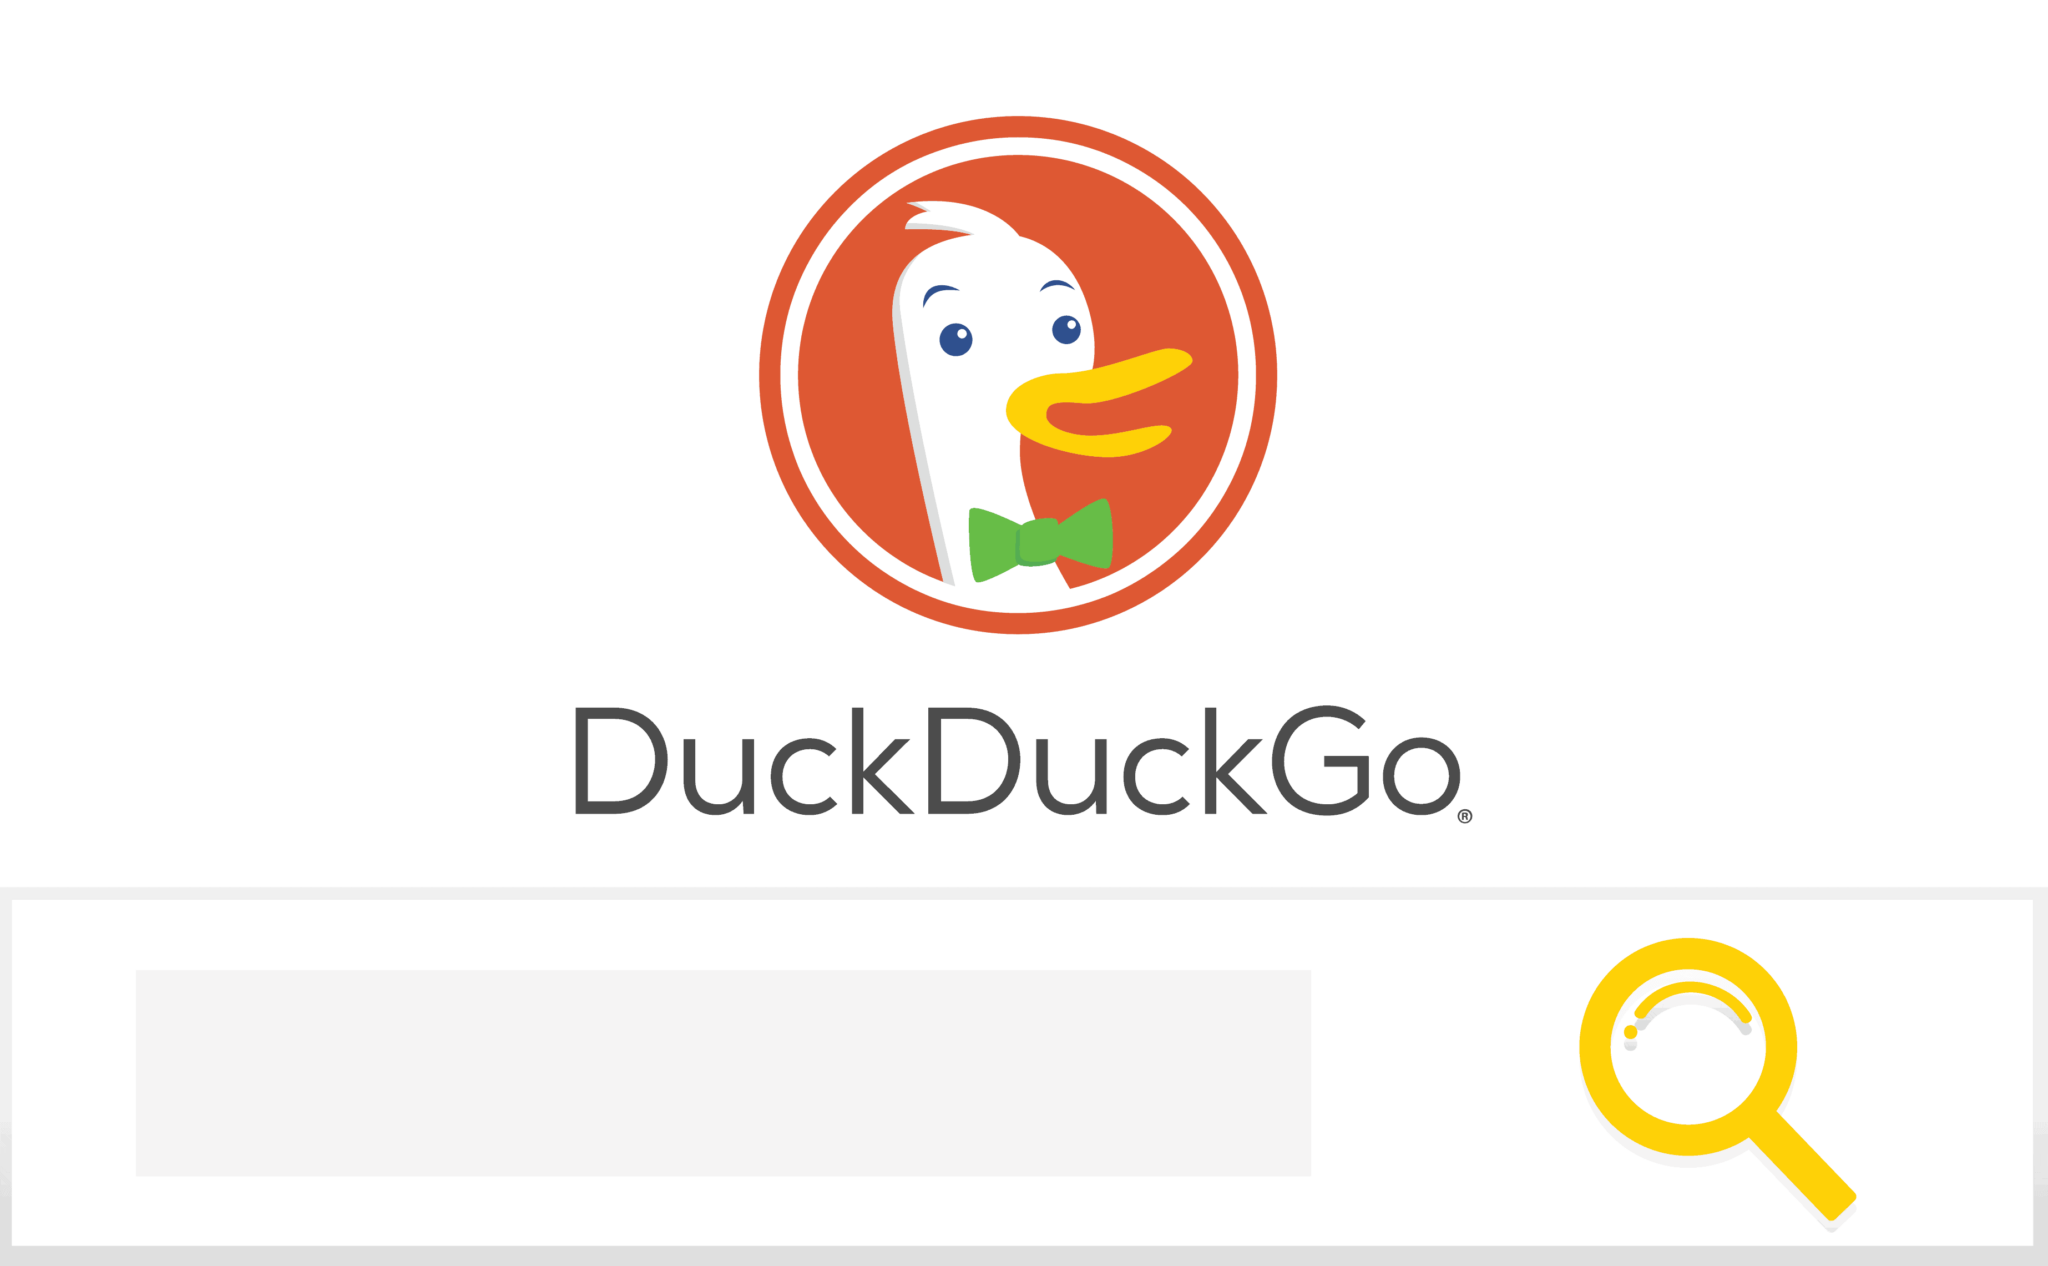 DuckDuckGo SEO Agency - Expert DuckDuckGo SEO - Pearl Lemon